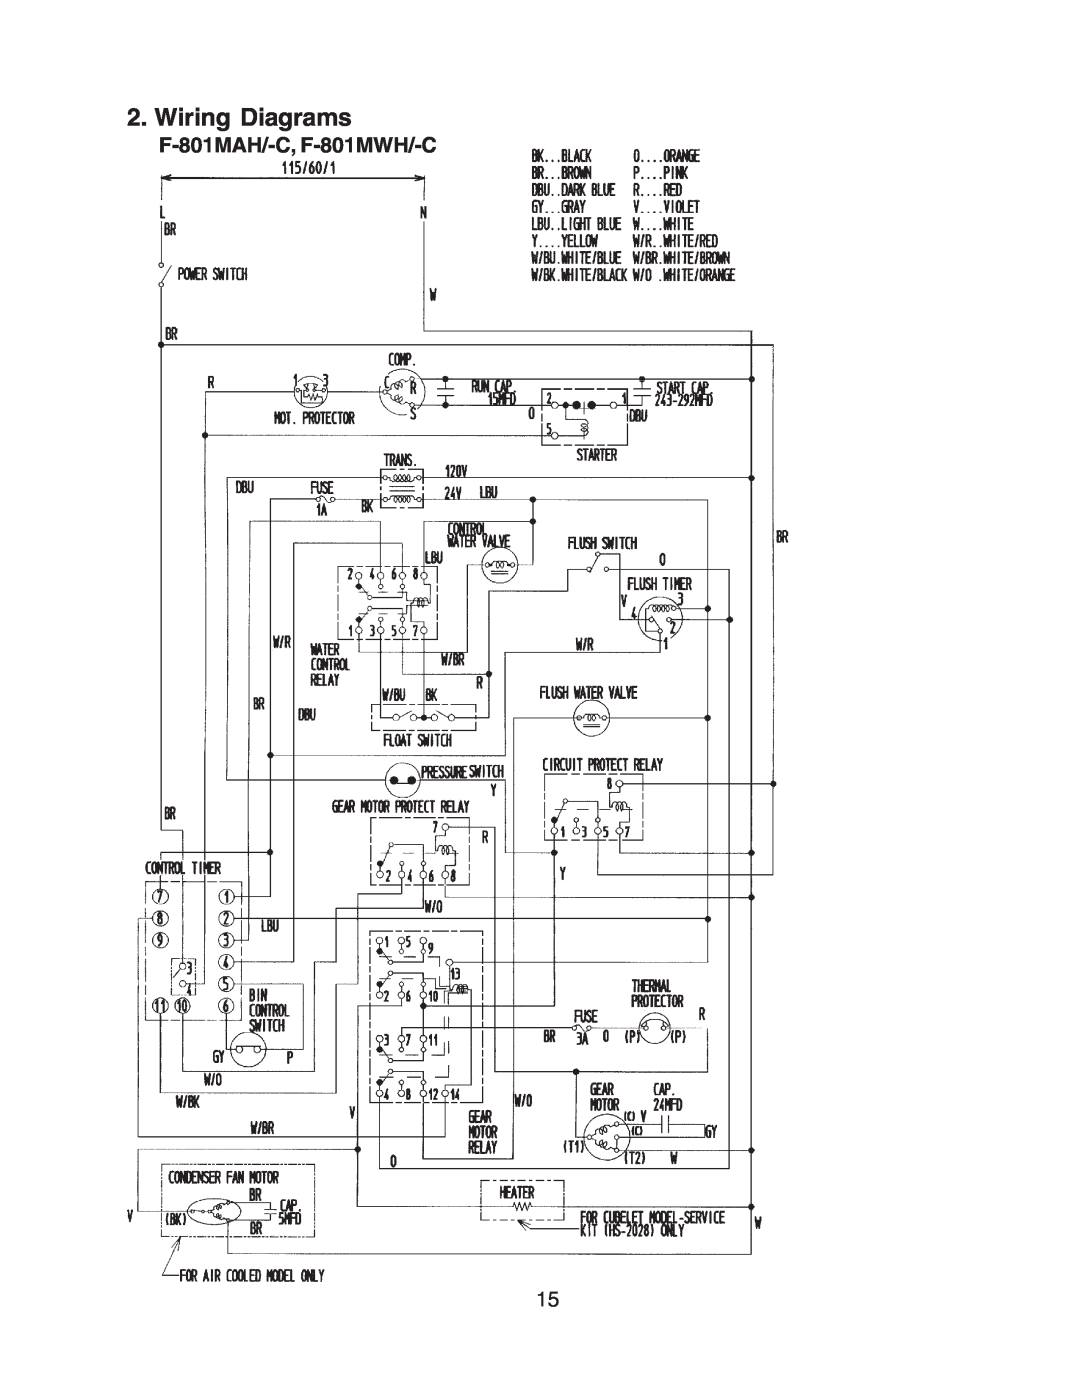 Hoshizaki F-80 I MAH (-c), F-80 I MWH (-c) service manual Wiring Diagrams, F-801MAH/-C, F-801MWH/-C 